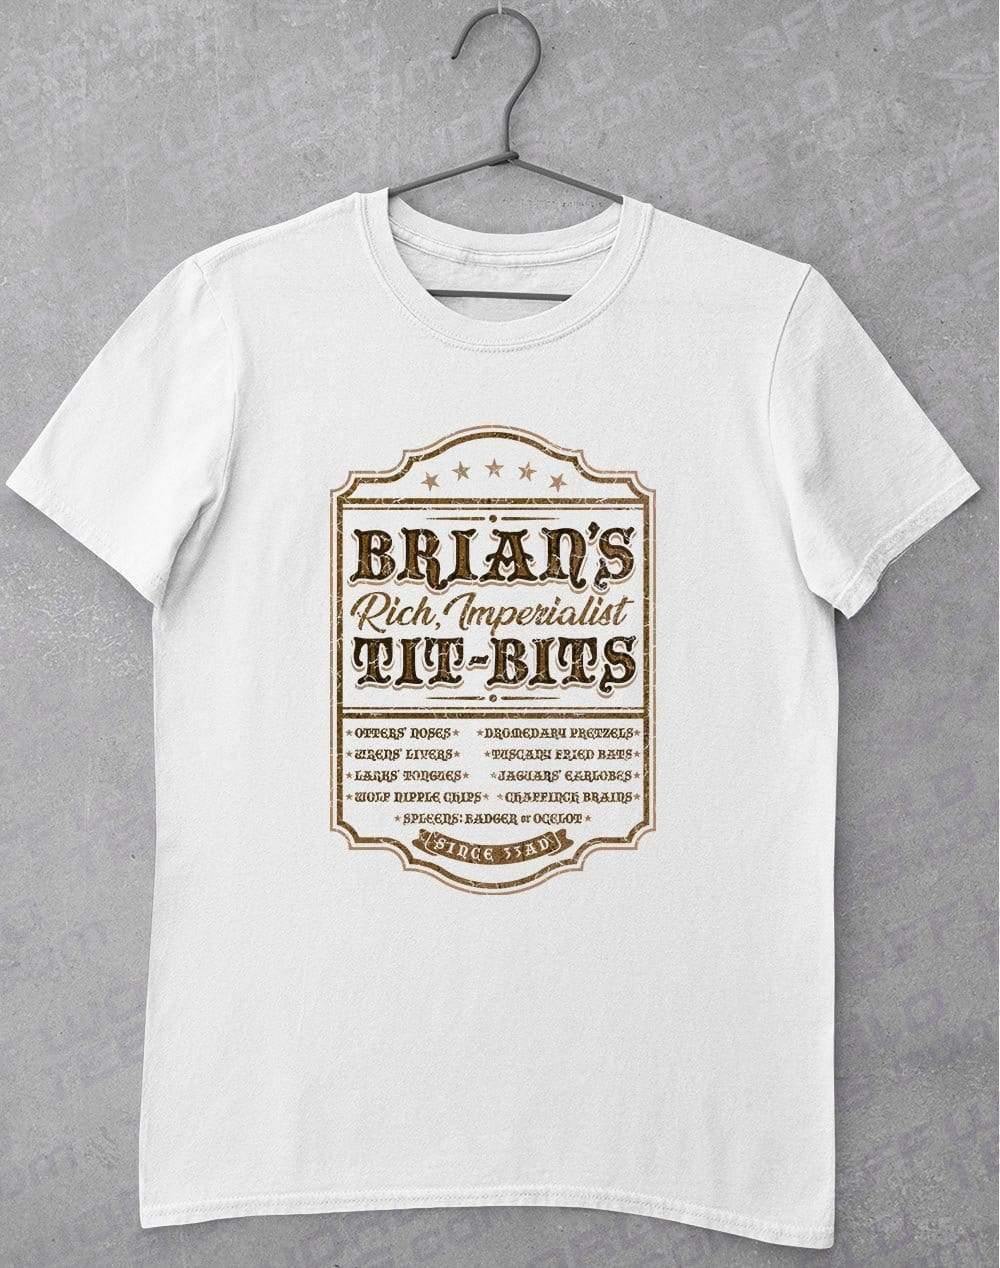 Brian's Tit-Bits T-Shirt S / White  - Off World Tees